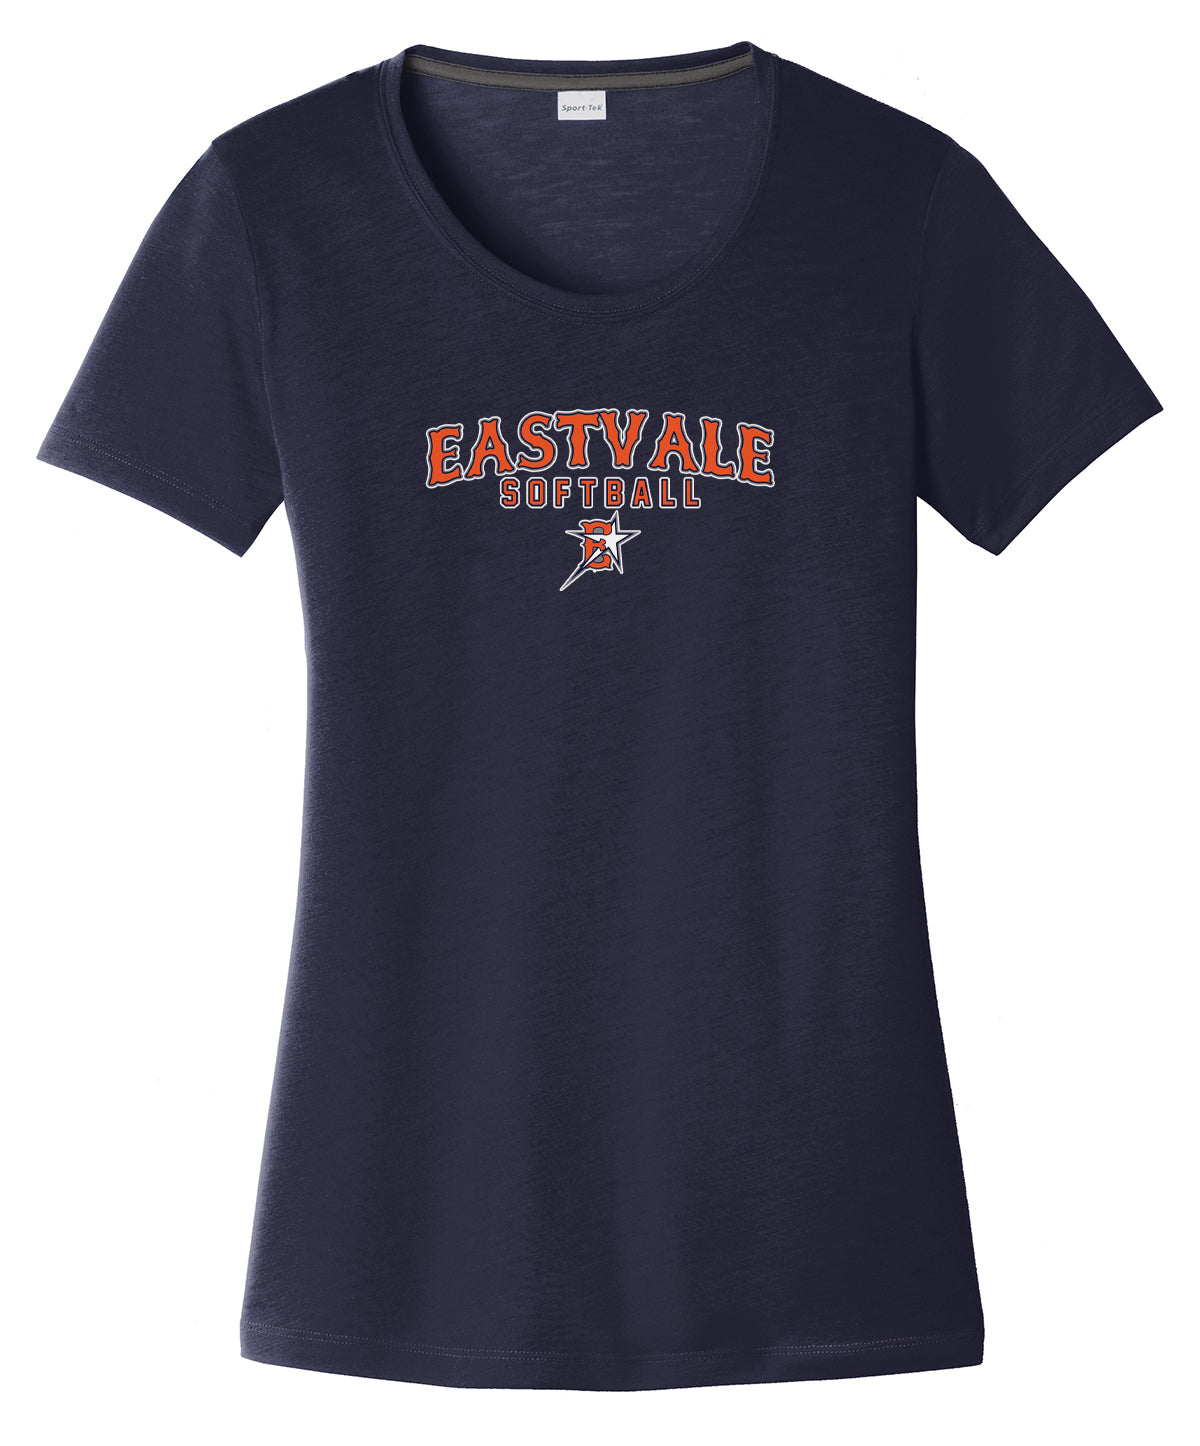 Eastvale Girl's Softball Women's CottonTouch Performance T-Shirt